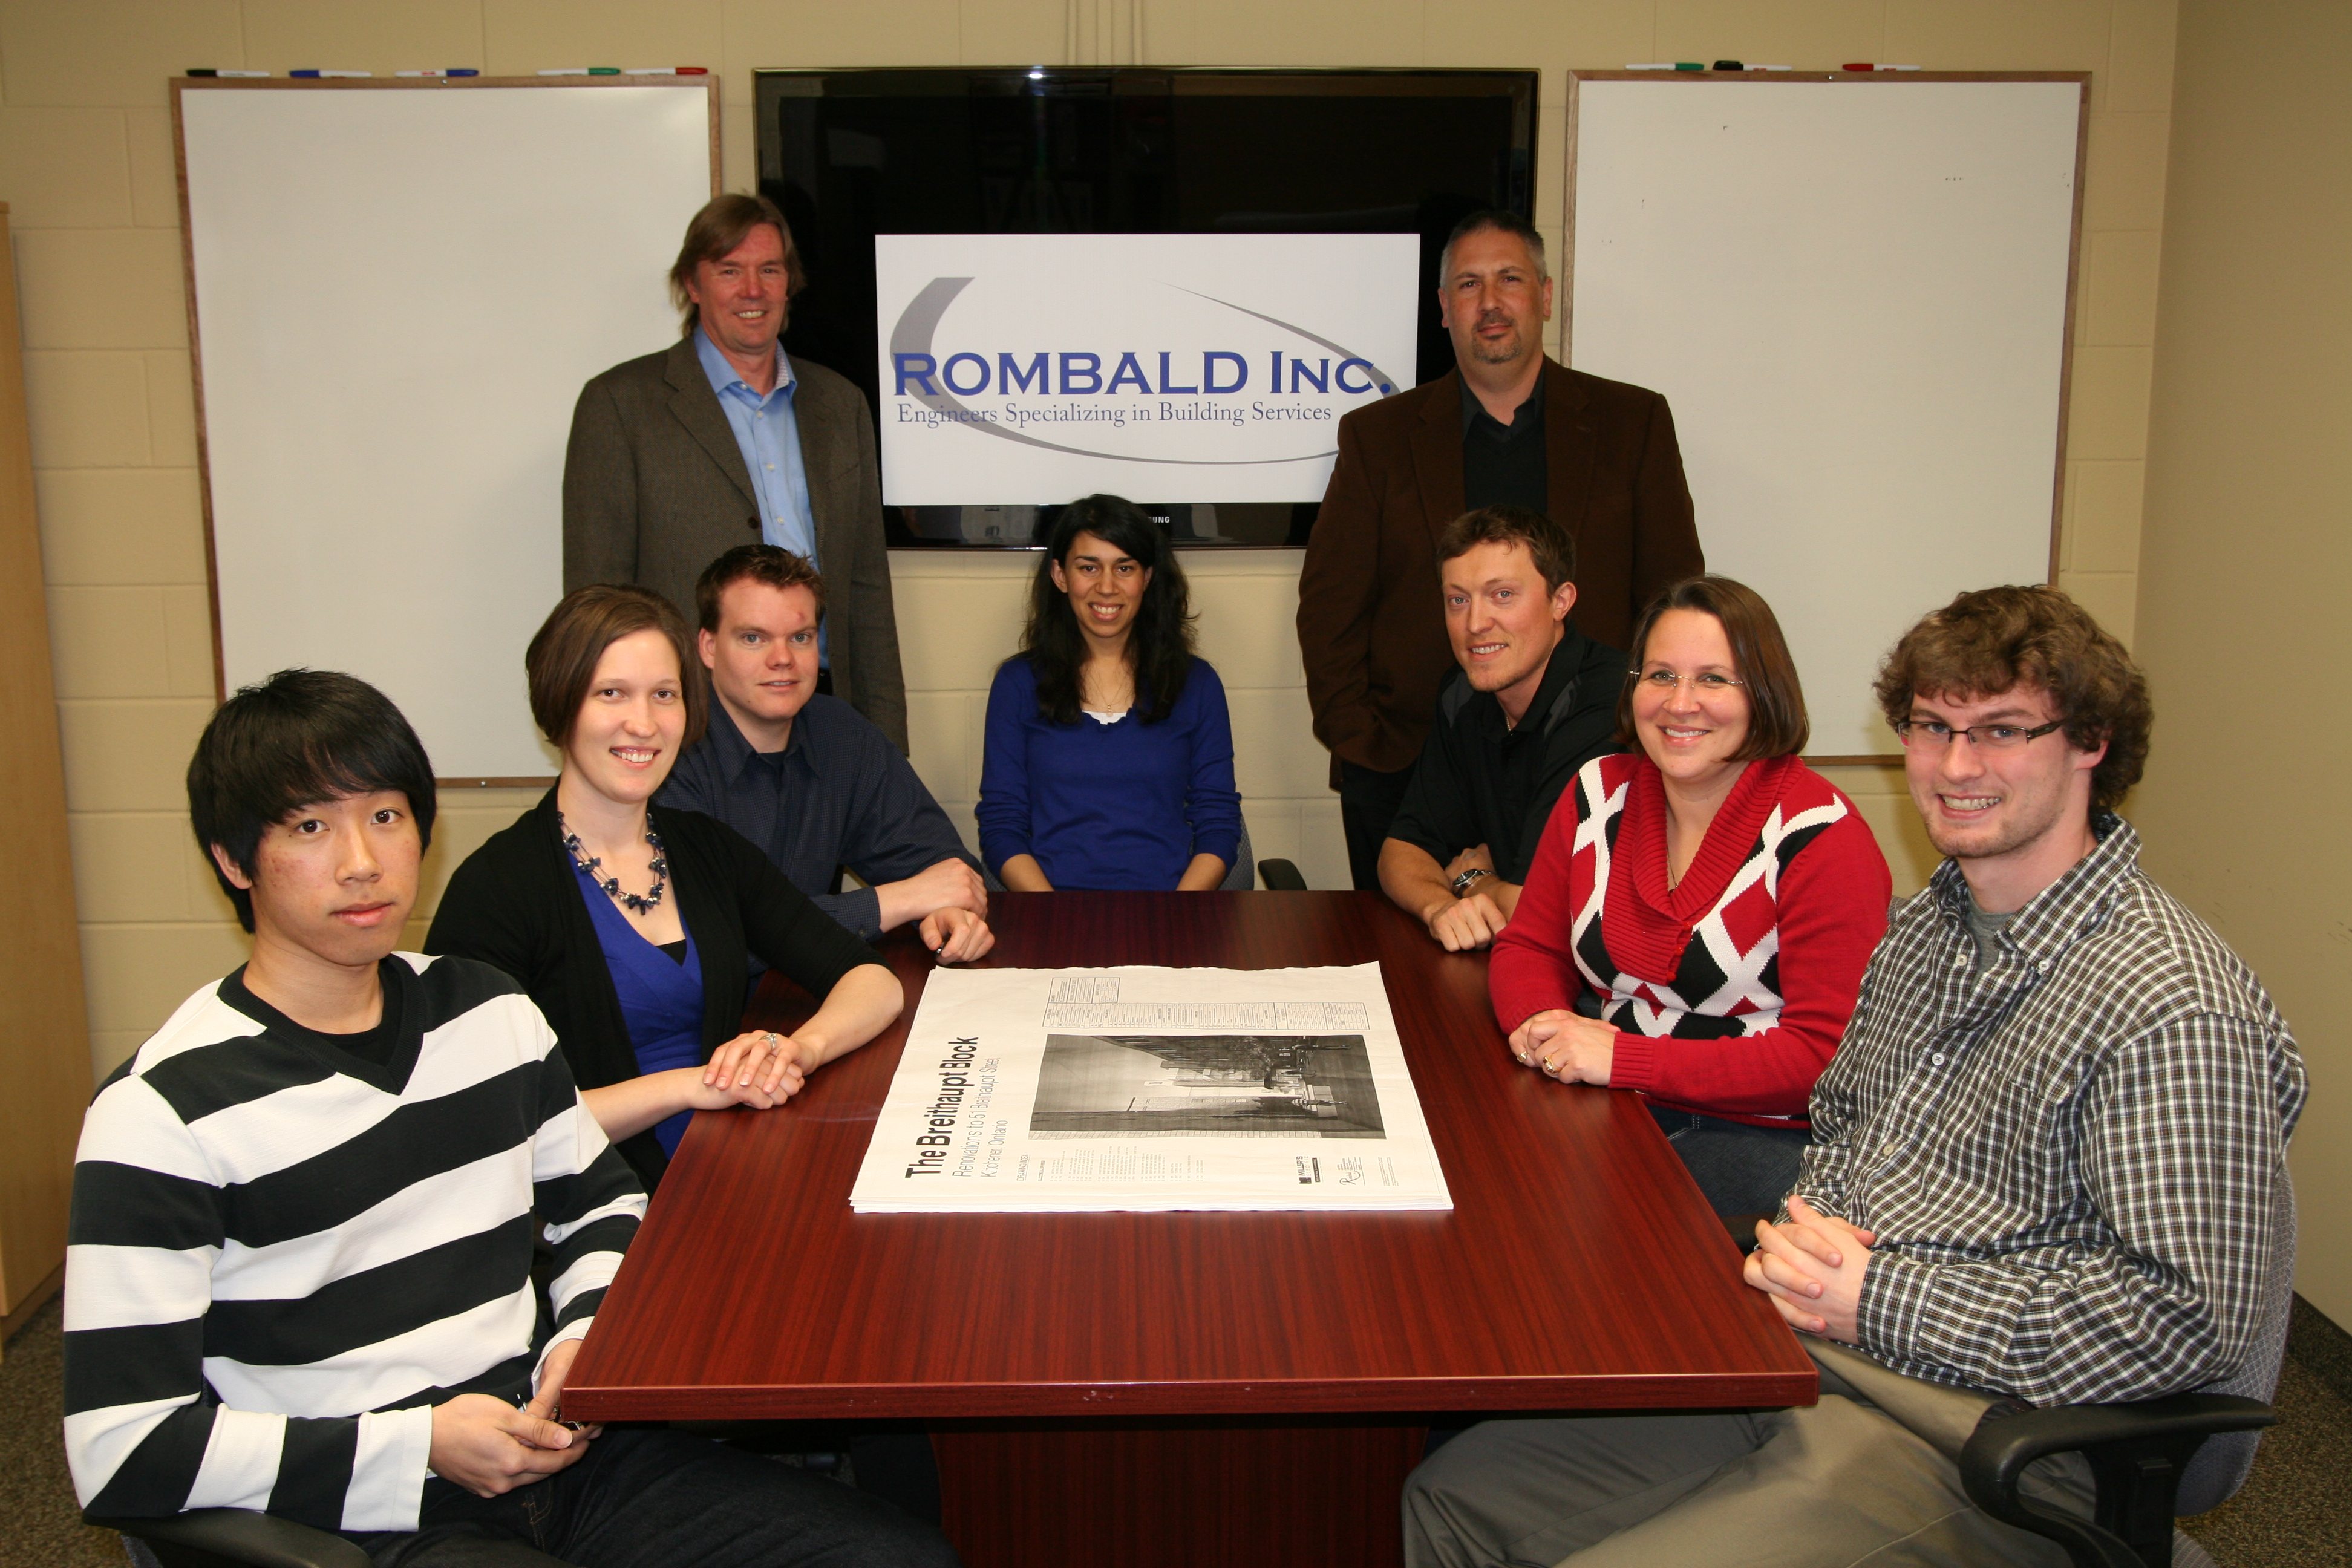 The Rombald team